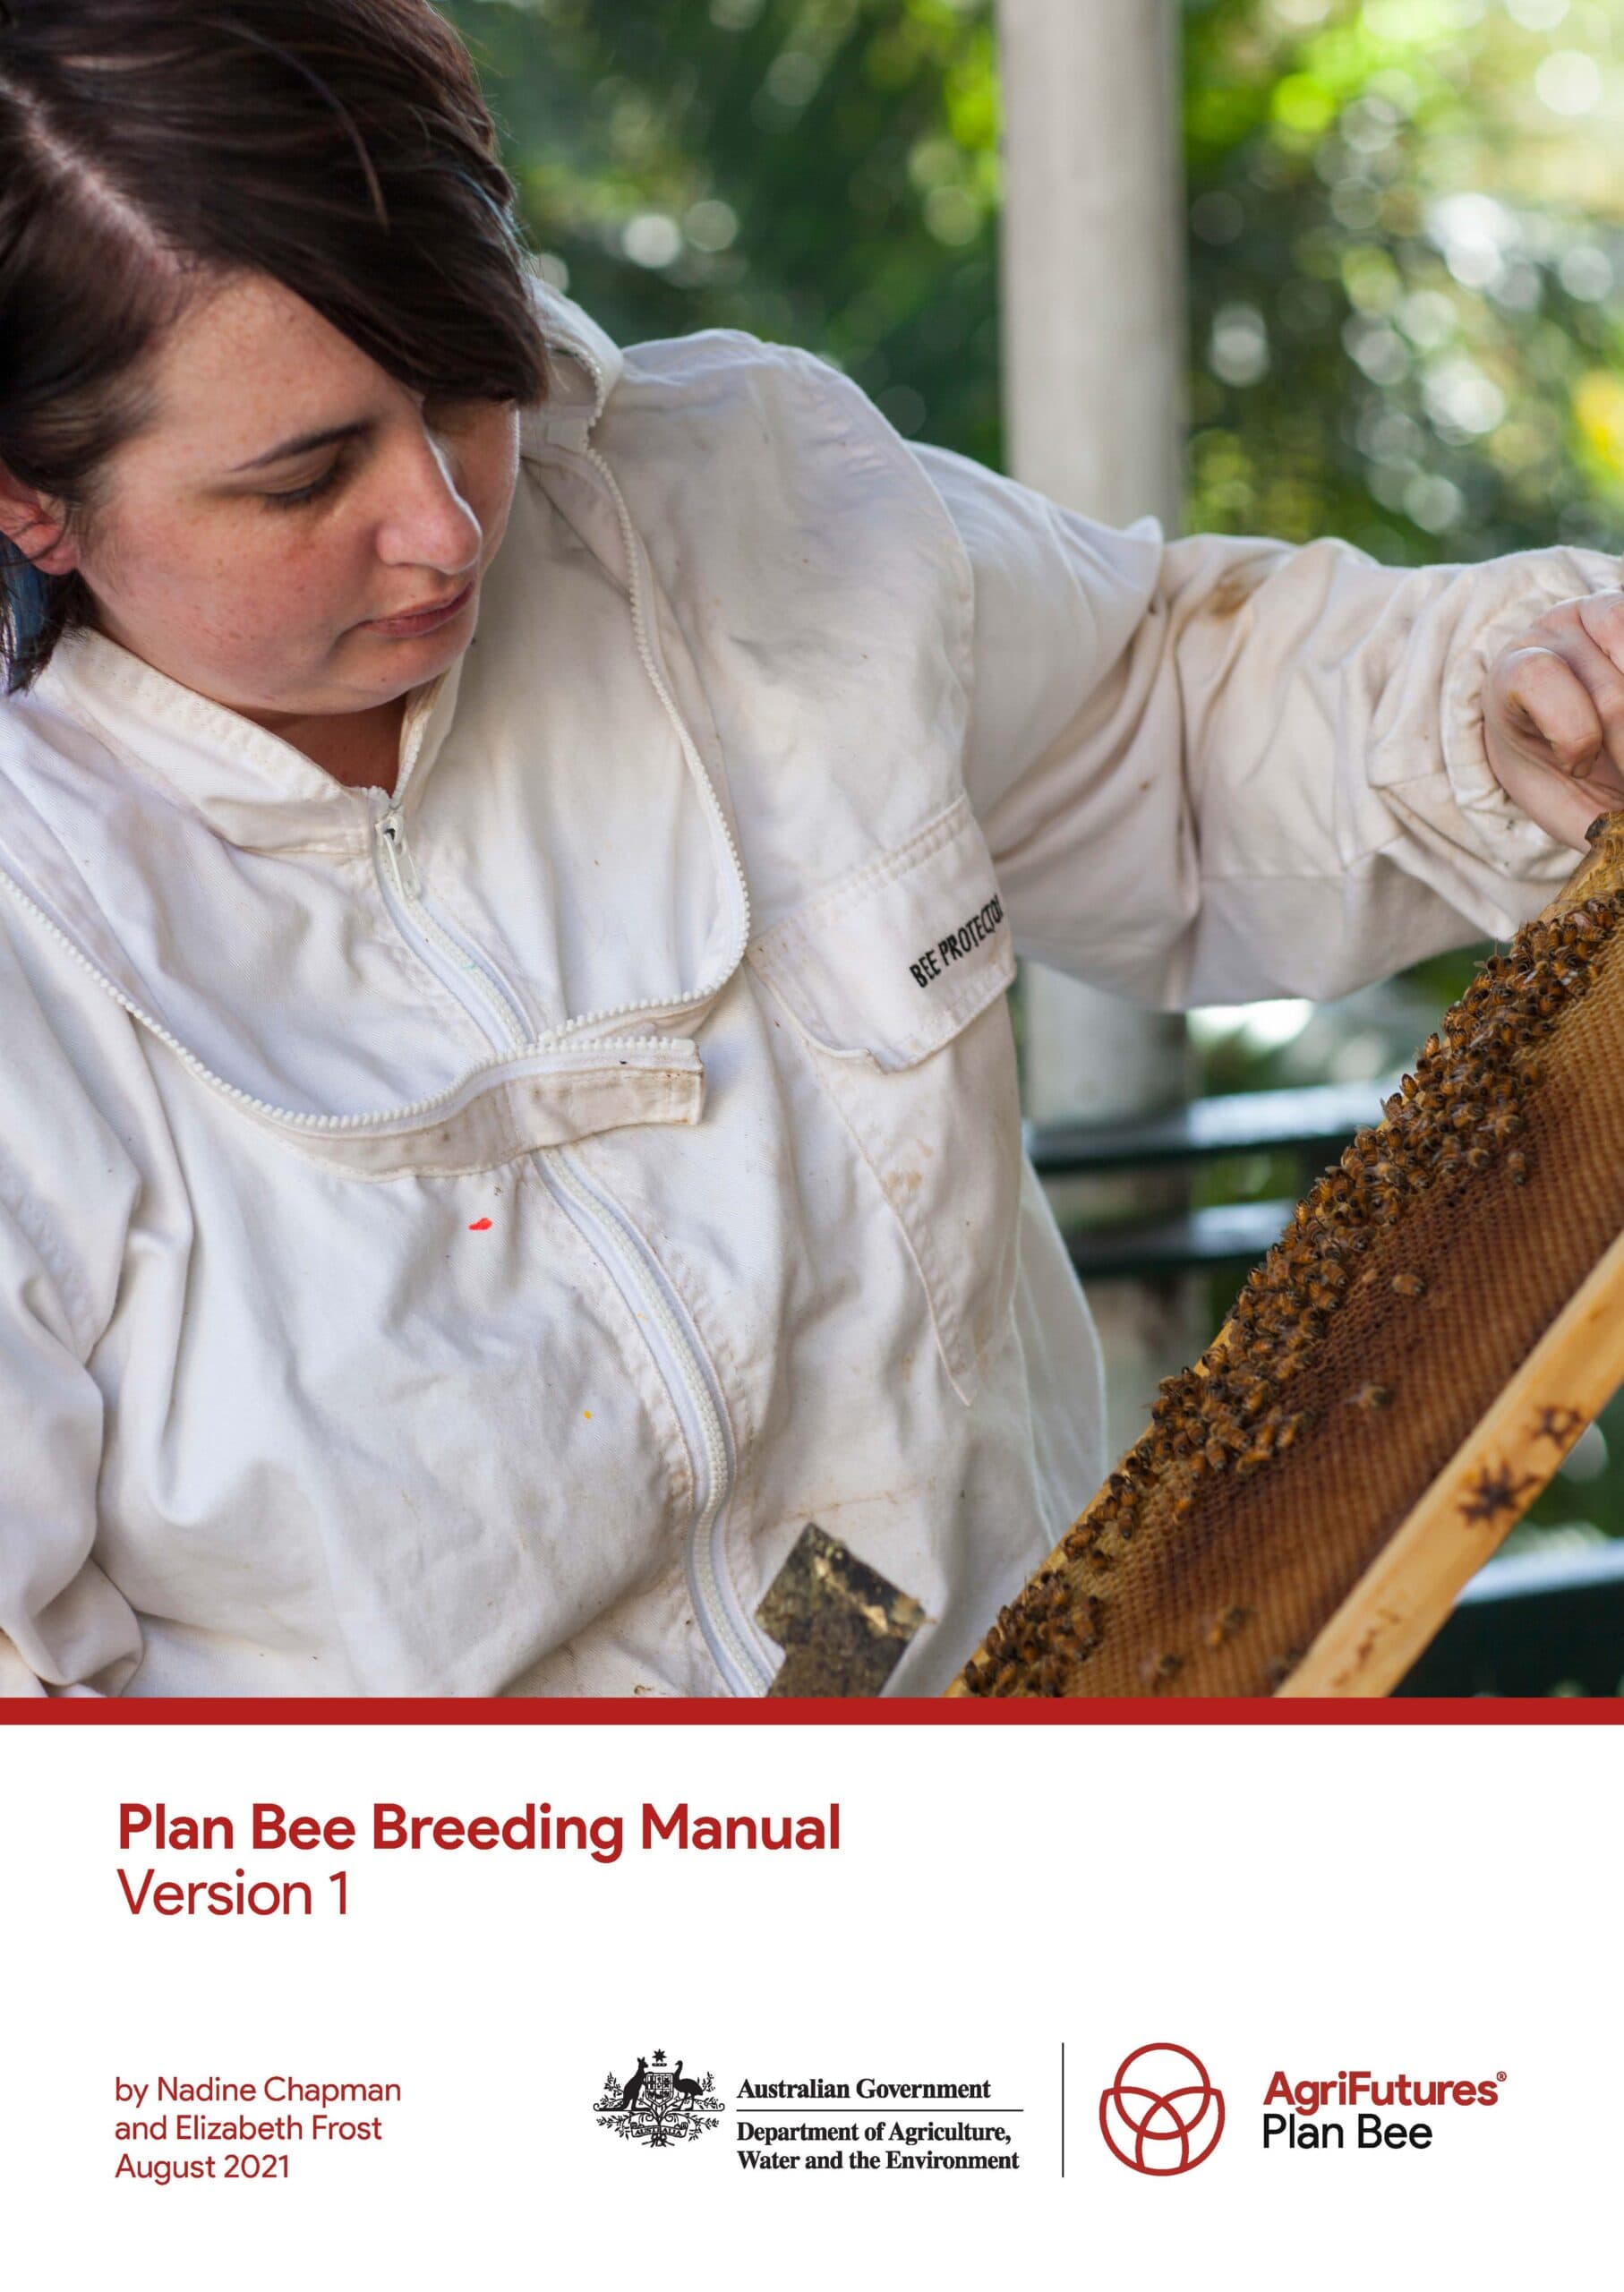 Plan Bee Breeding Manual - image